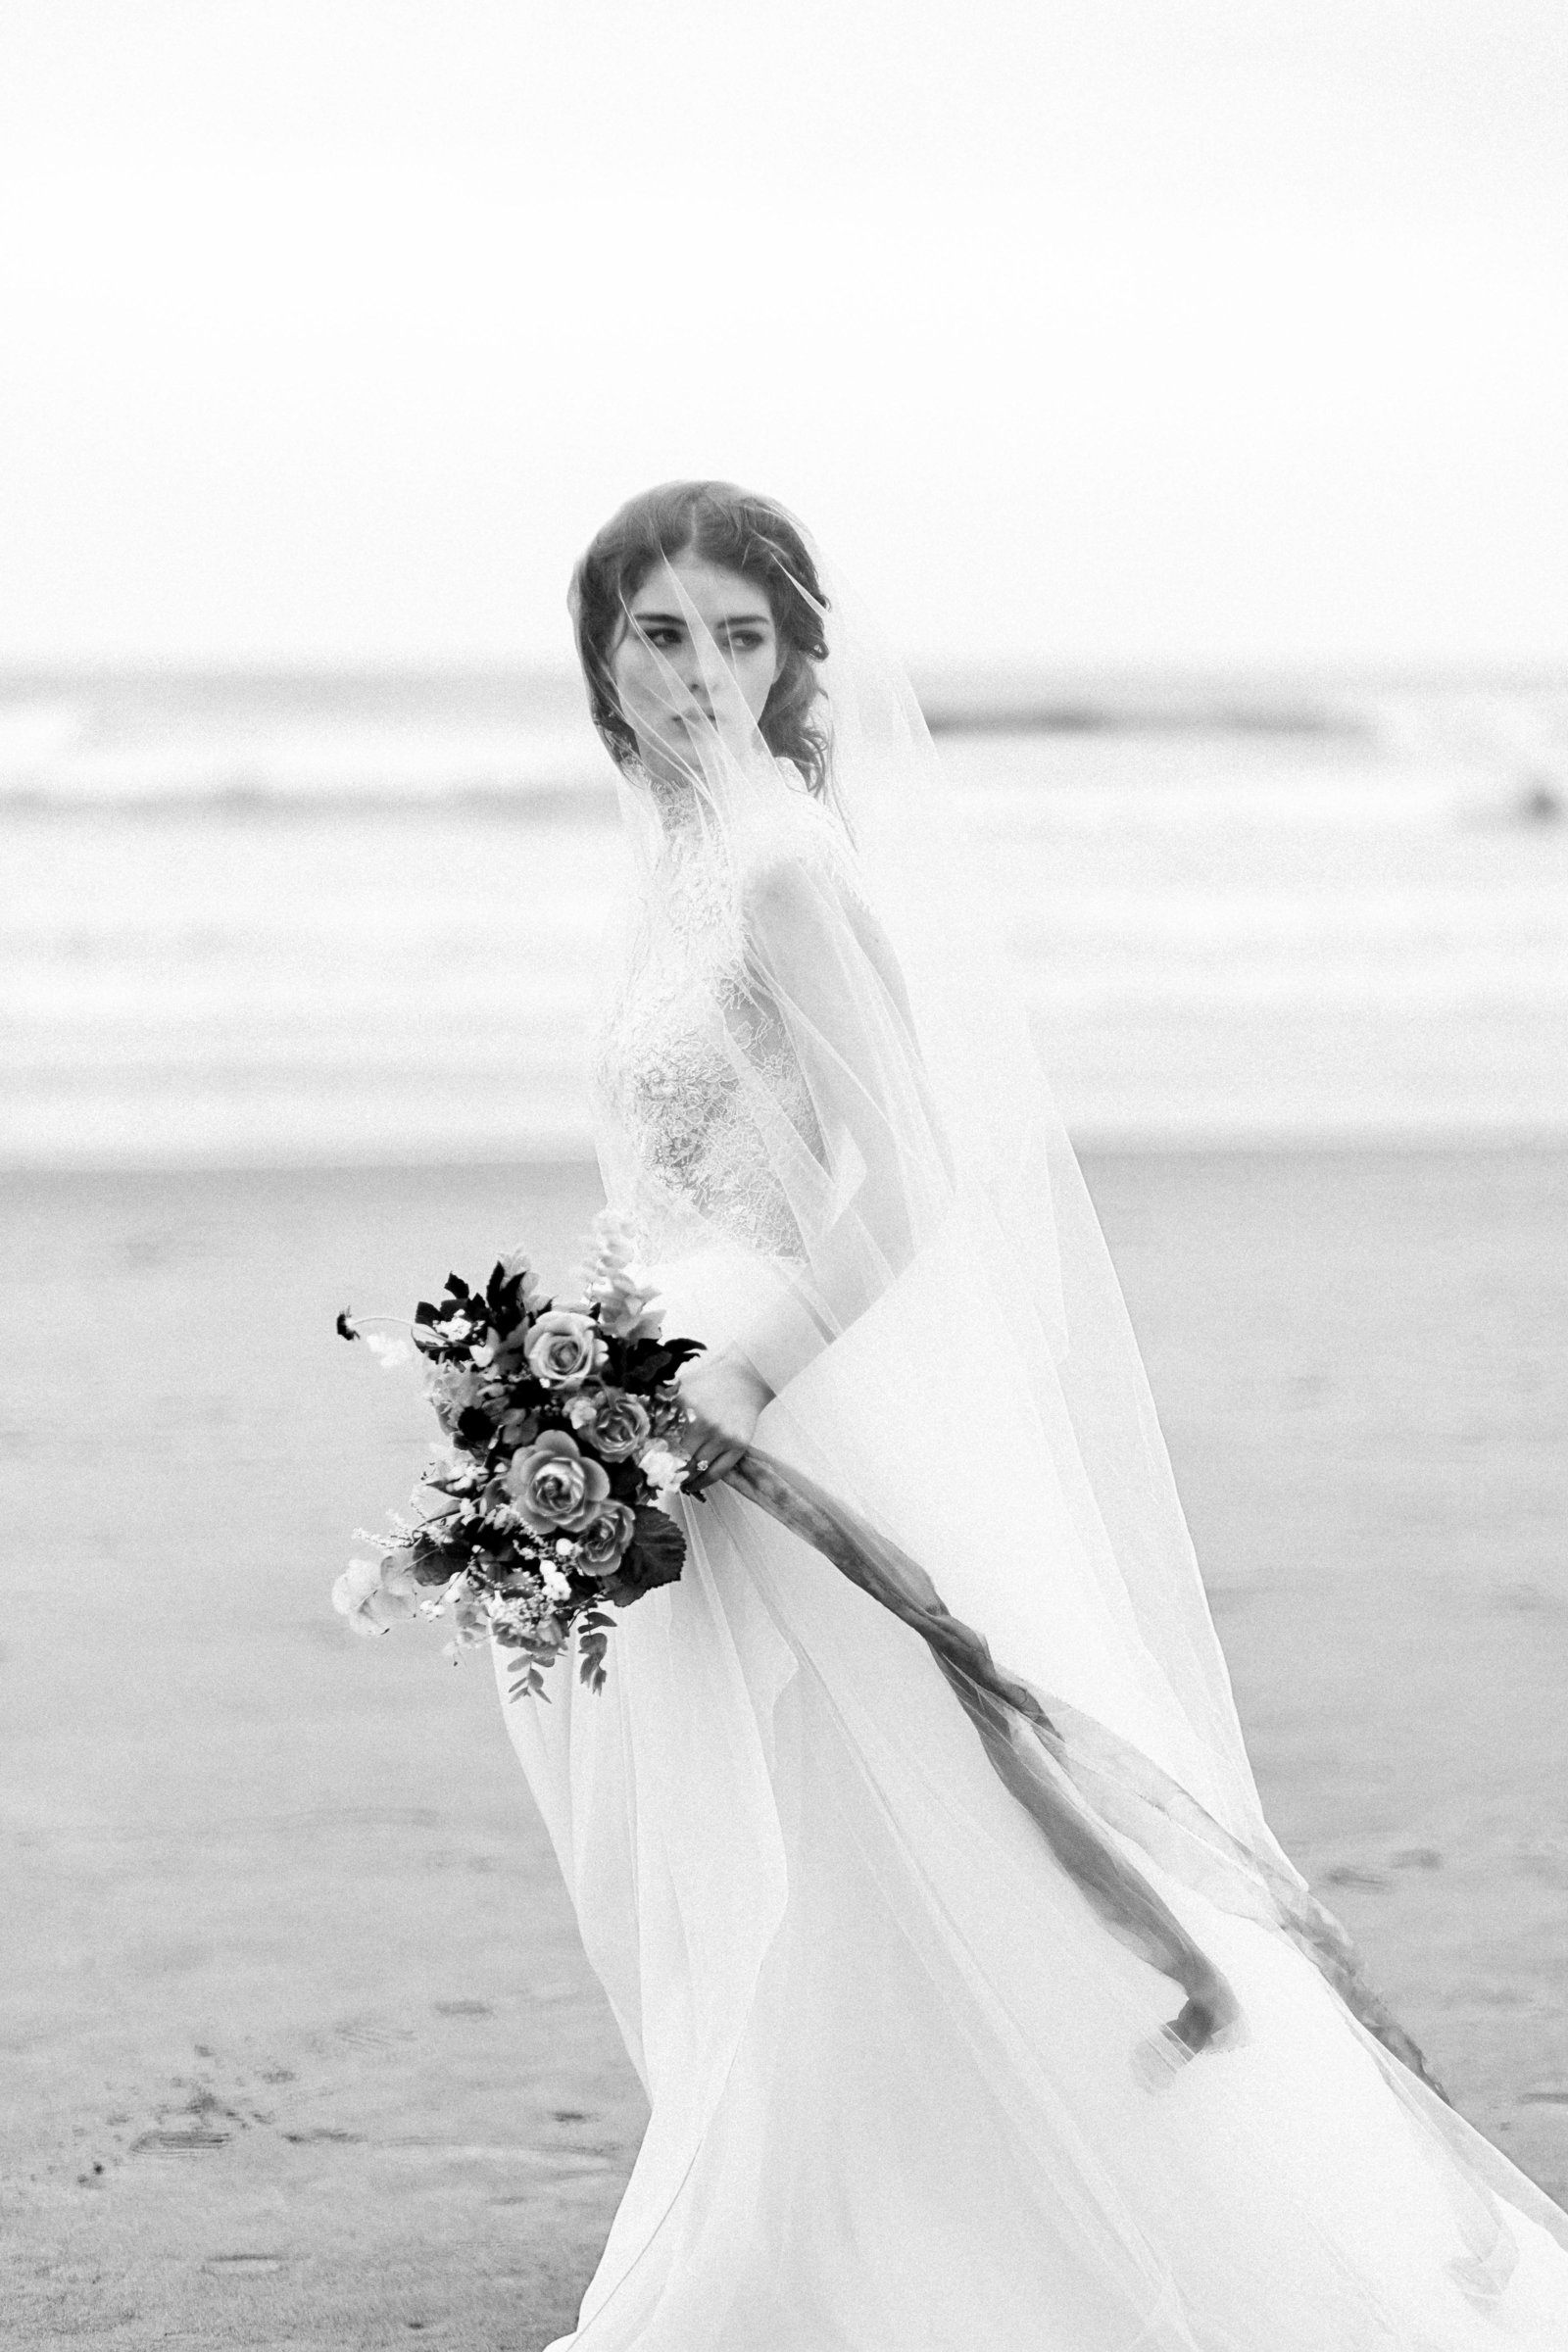 Cannon-Beach-Bridal-Editorial-Georgia-Ruth-Photography-6